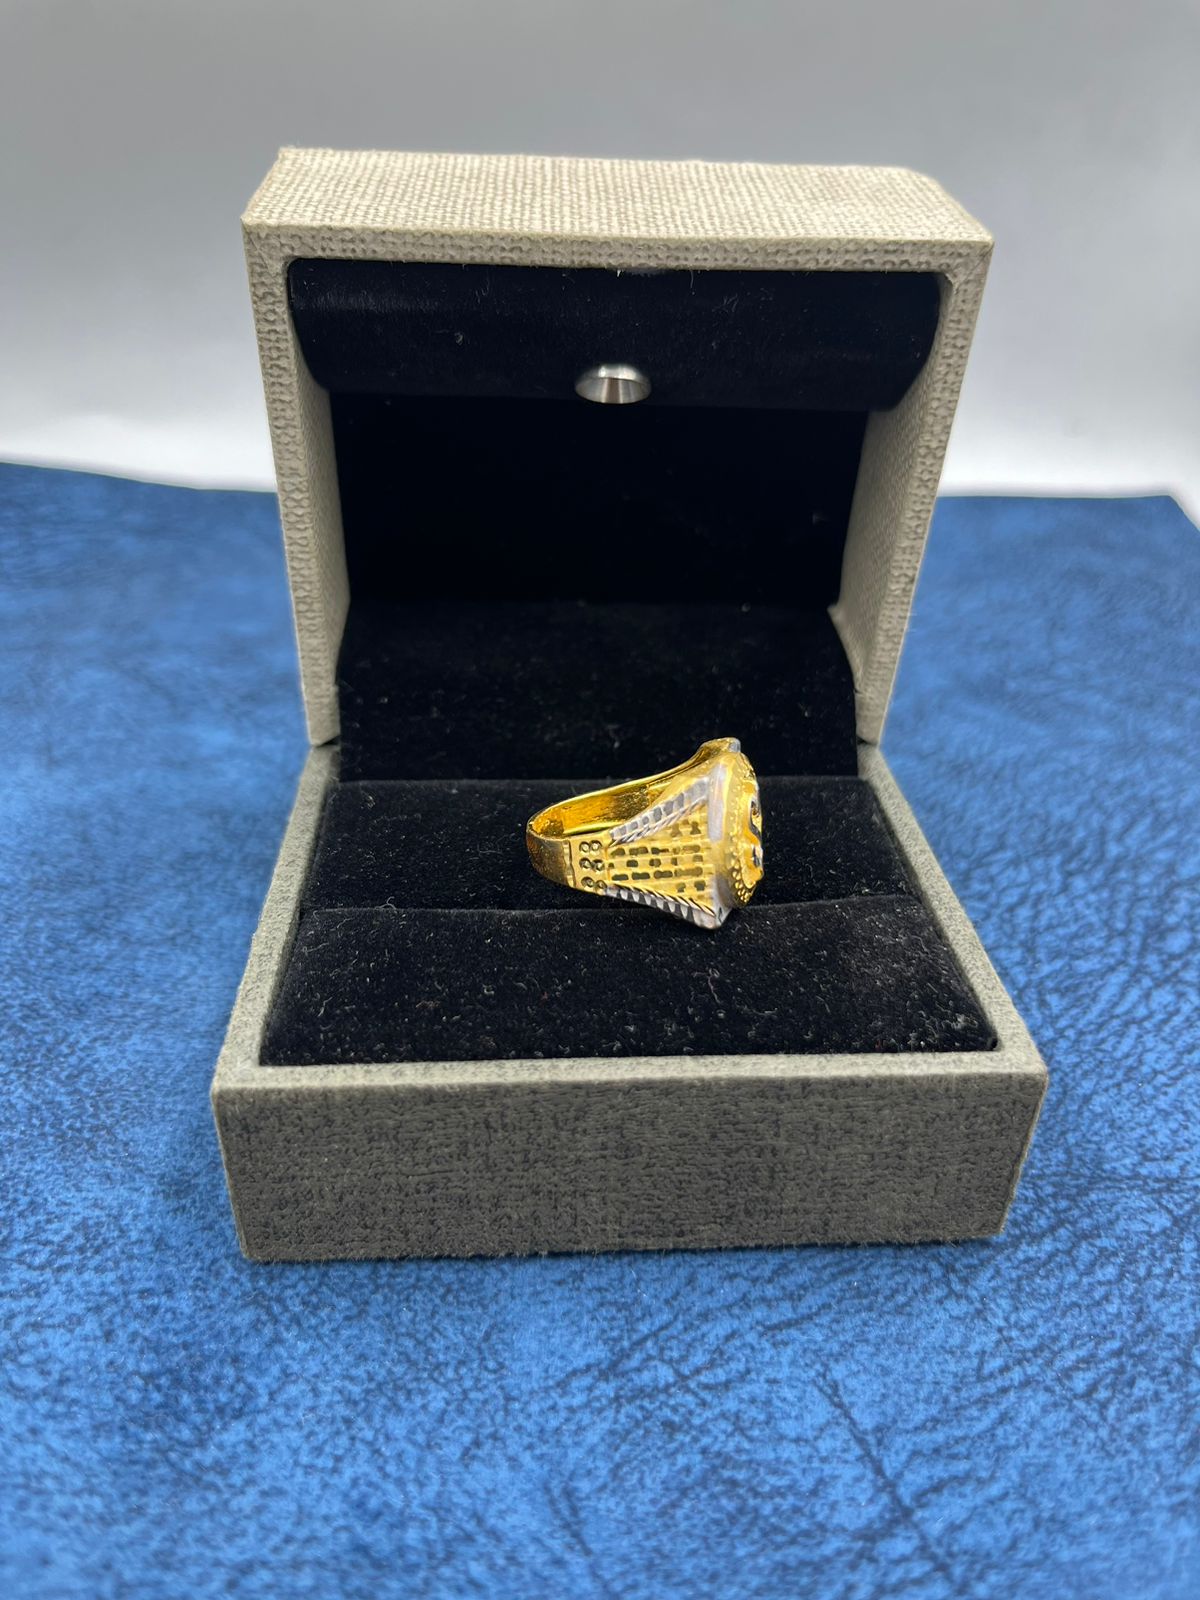 Rose Gold Diamond Ring in Jewellery Box - NE1040c – JEWELLERY GRAPHICS